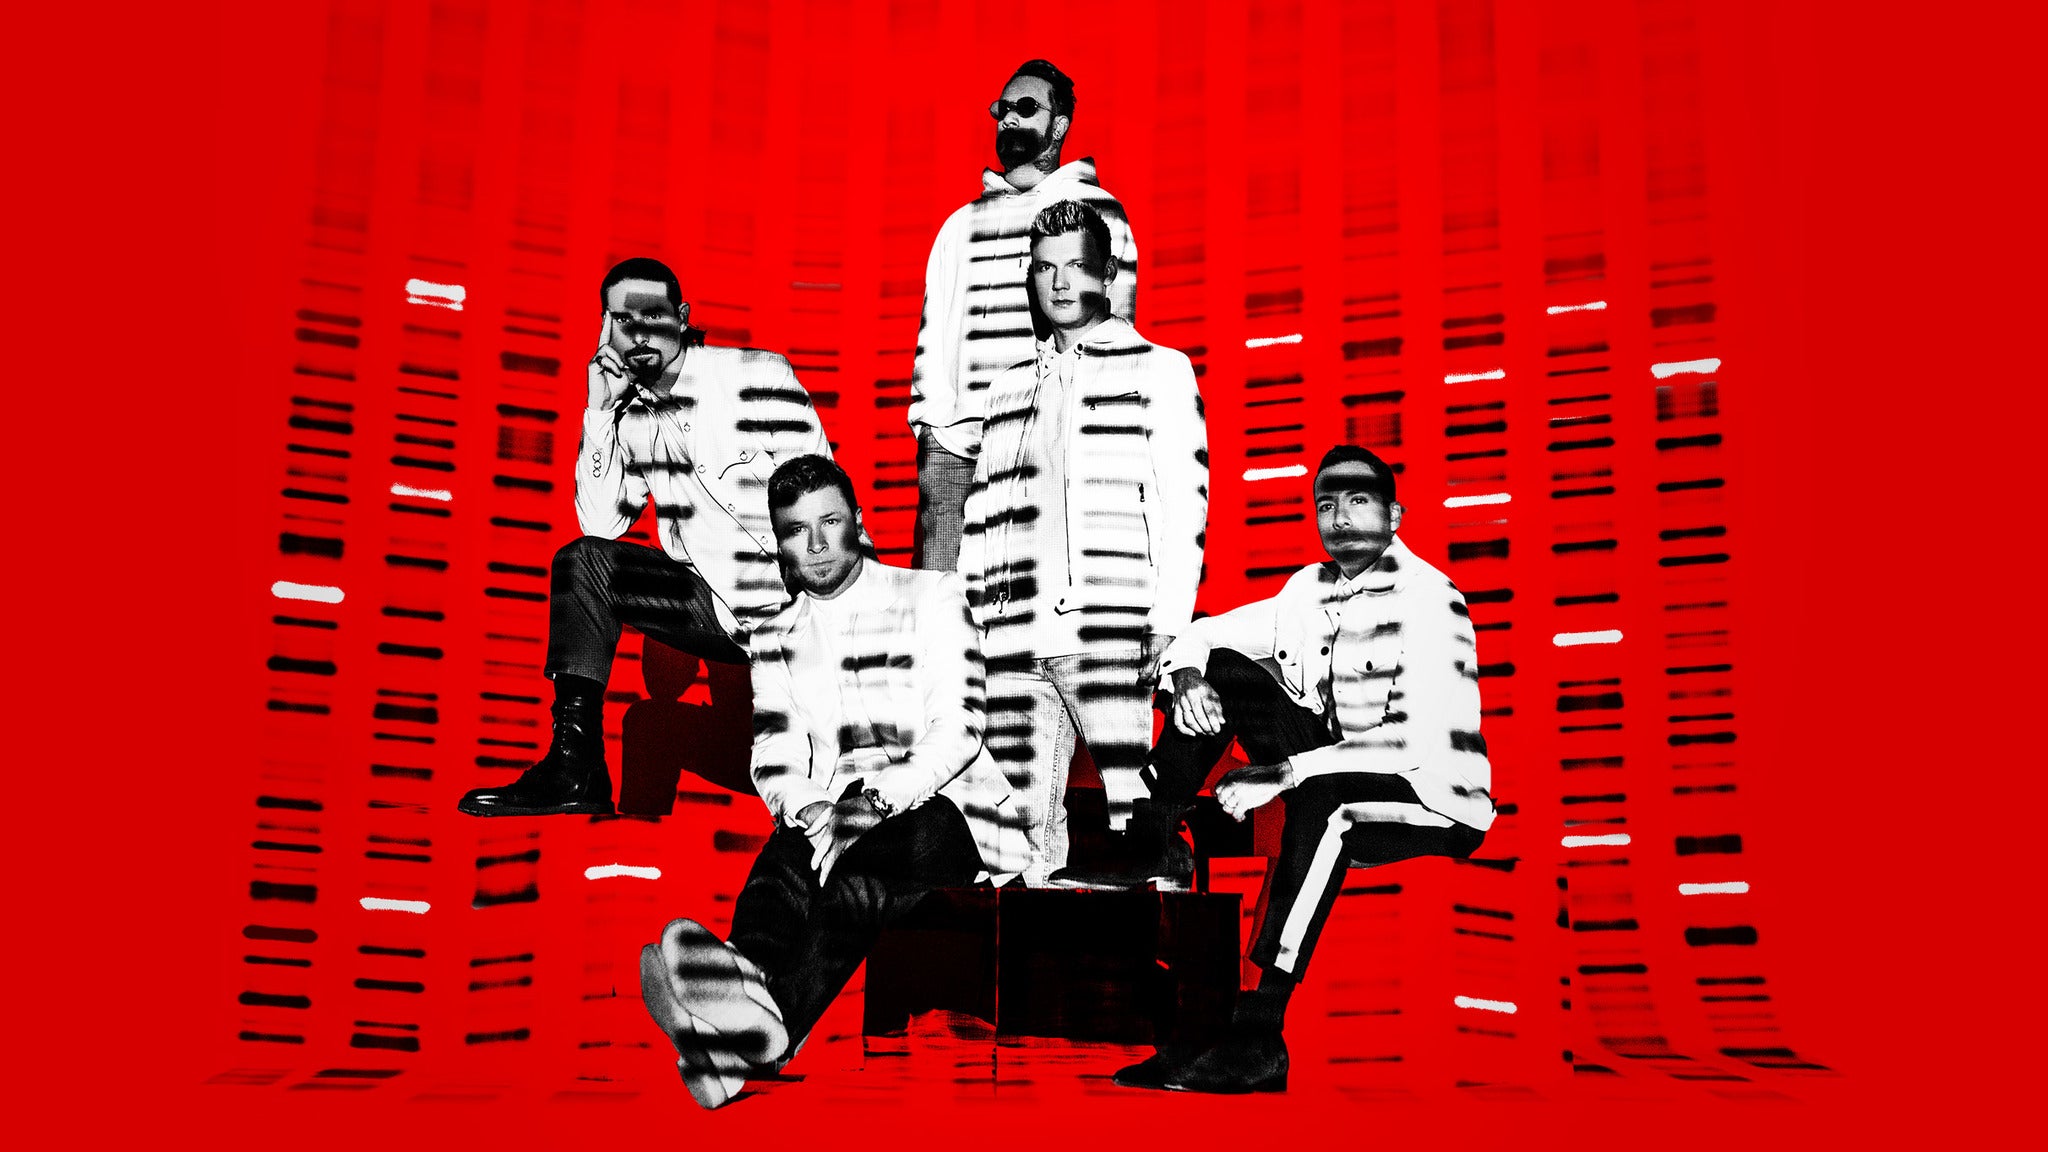 Backstreet Boys - A Very Backstreet Christmas Party in Las Vegas promo photo for Citi® Cardmember Preferred presale offer code